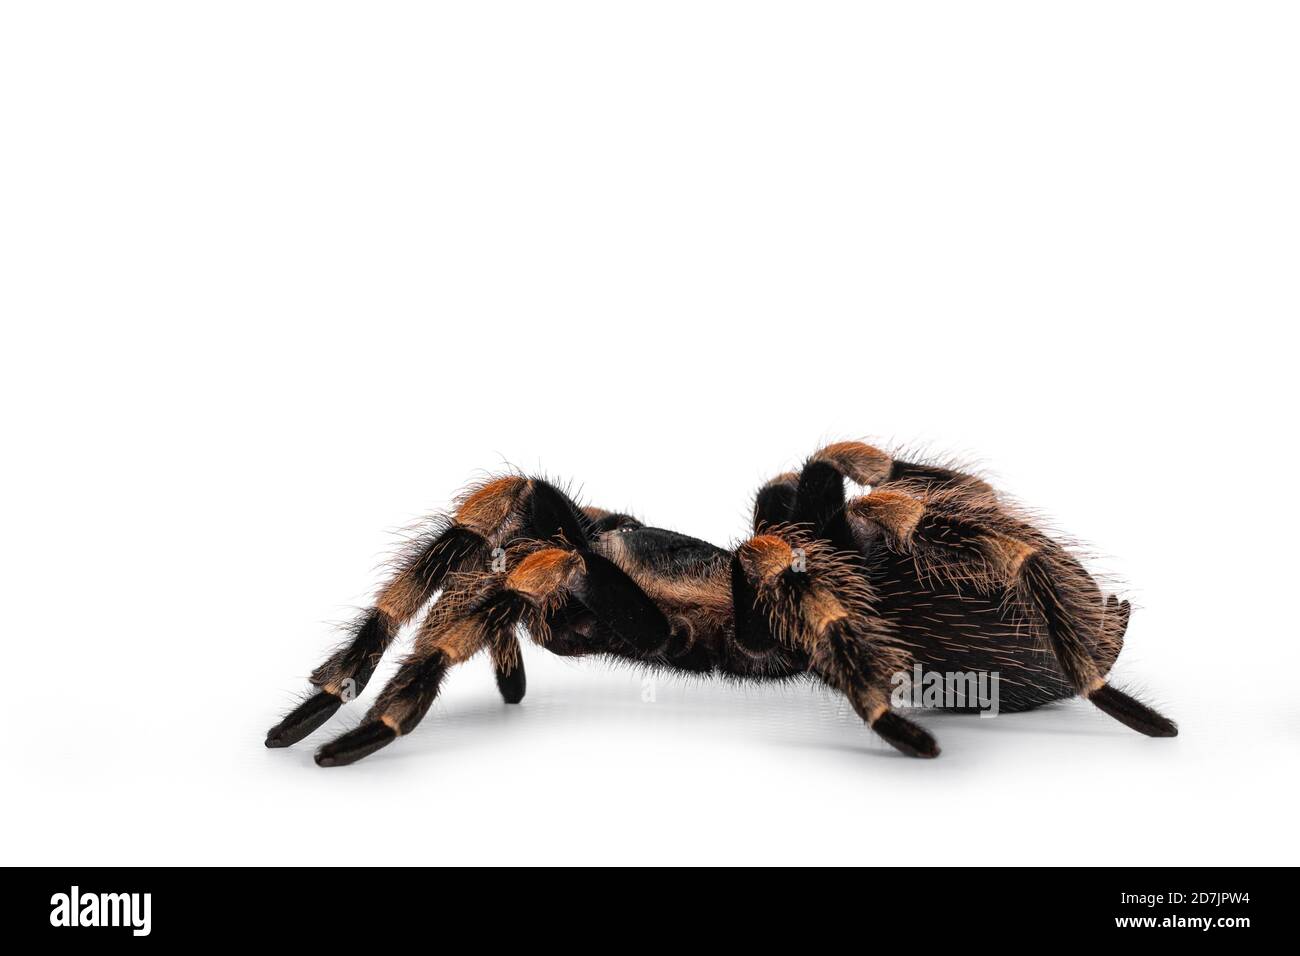 Side view of moving Mexican Redknee tarantula aka Brachypelma hamorii. Isolated on white background. Stock Photo